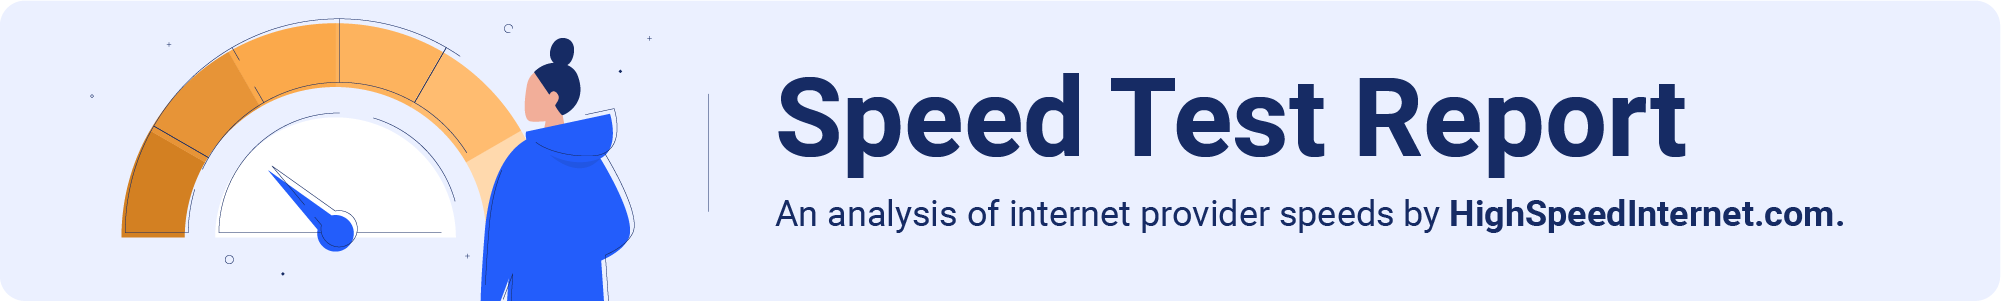 Highspeedinternet.com speed test report banner